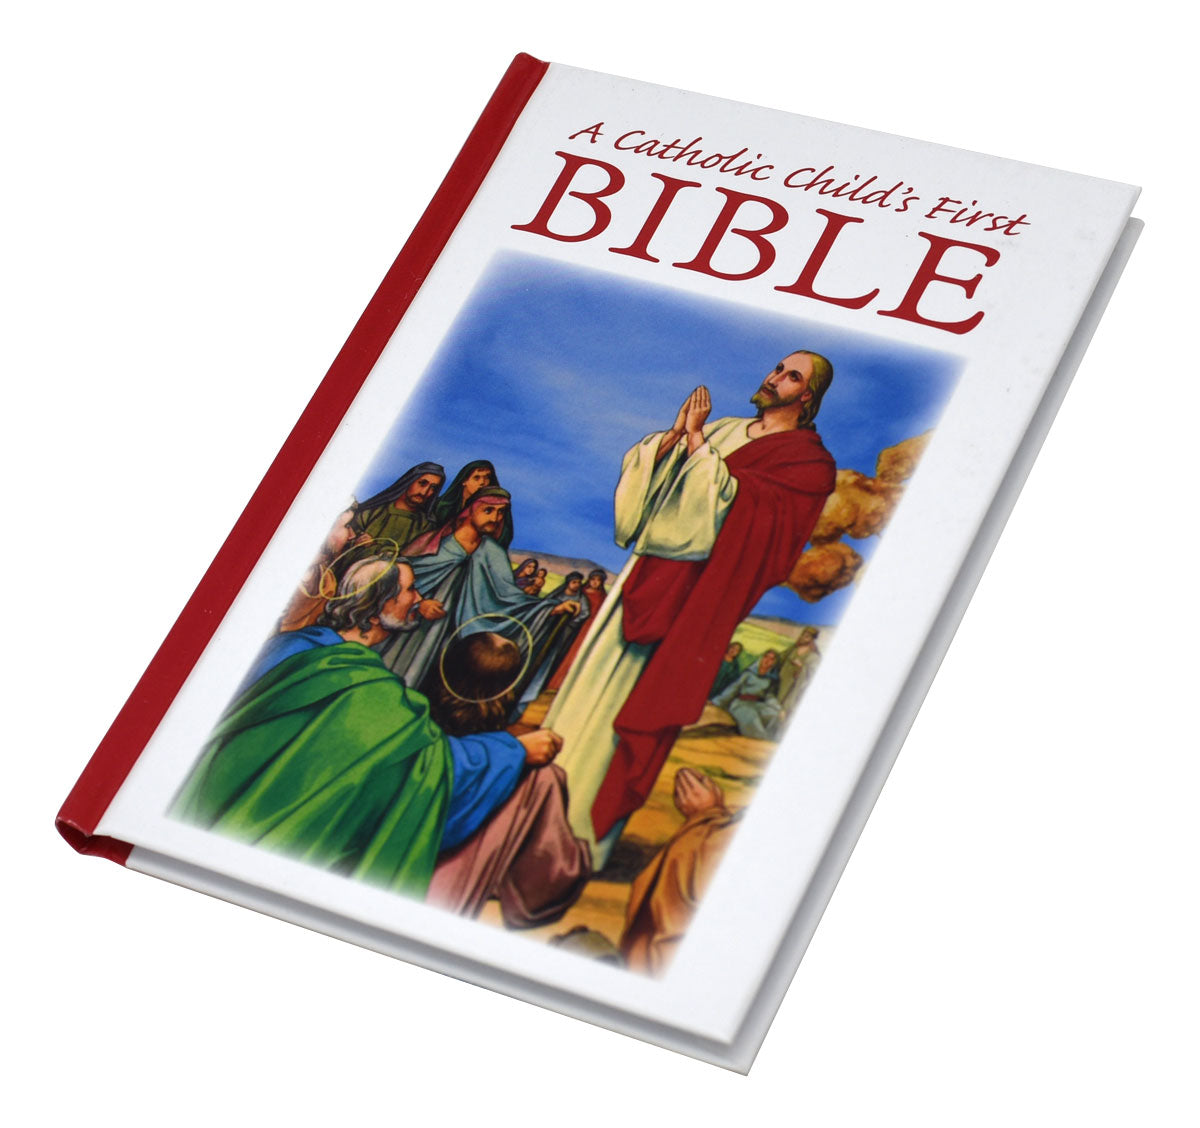 A Catholic Child's First Bible